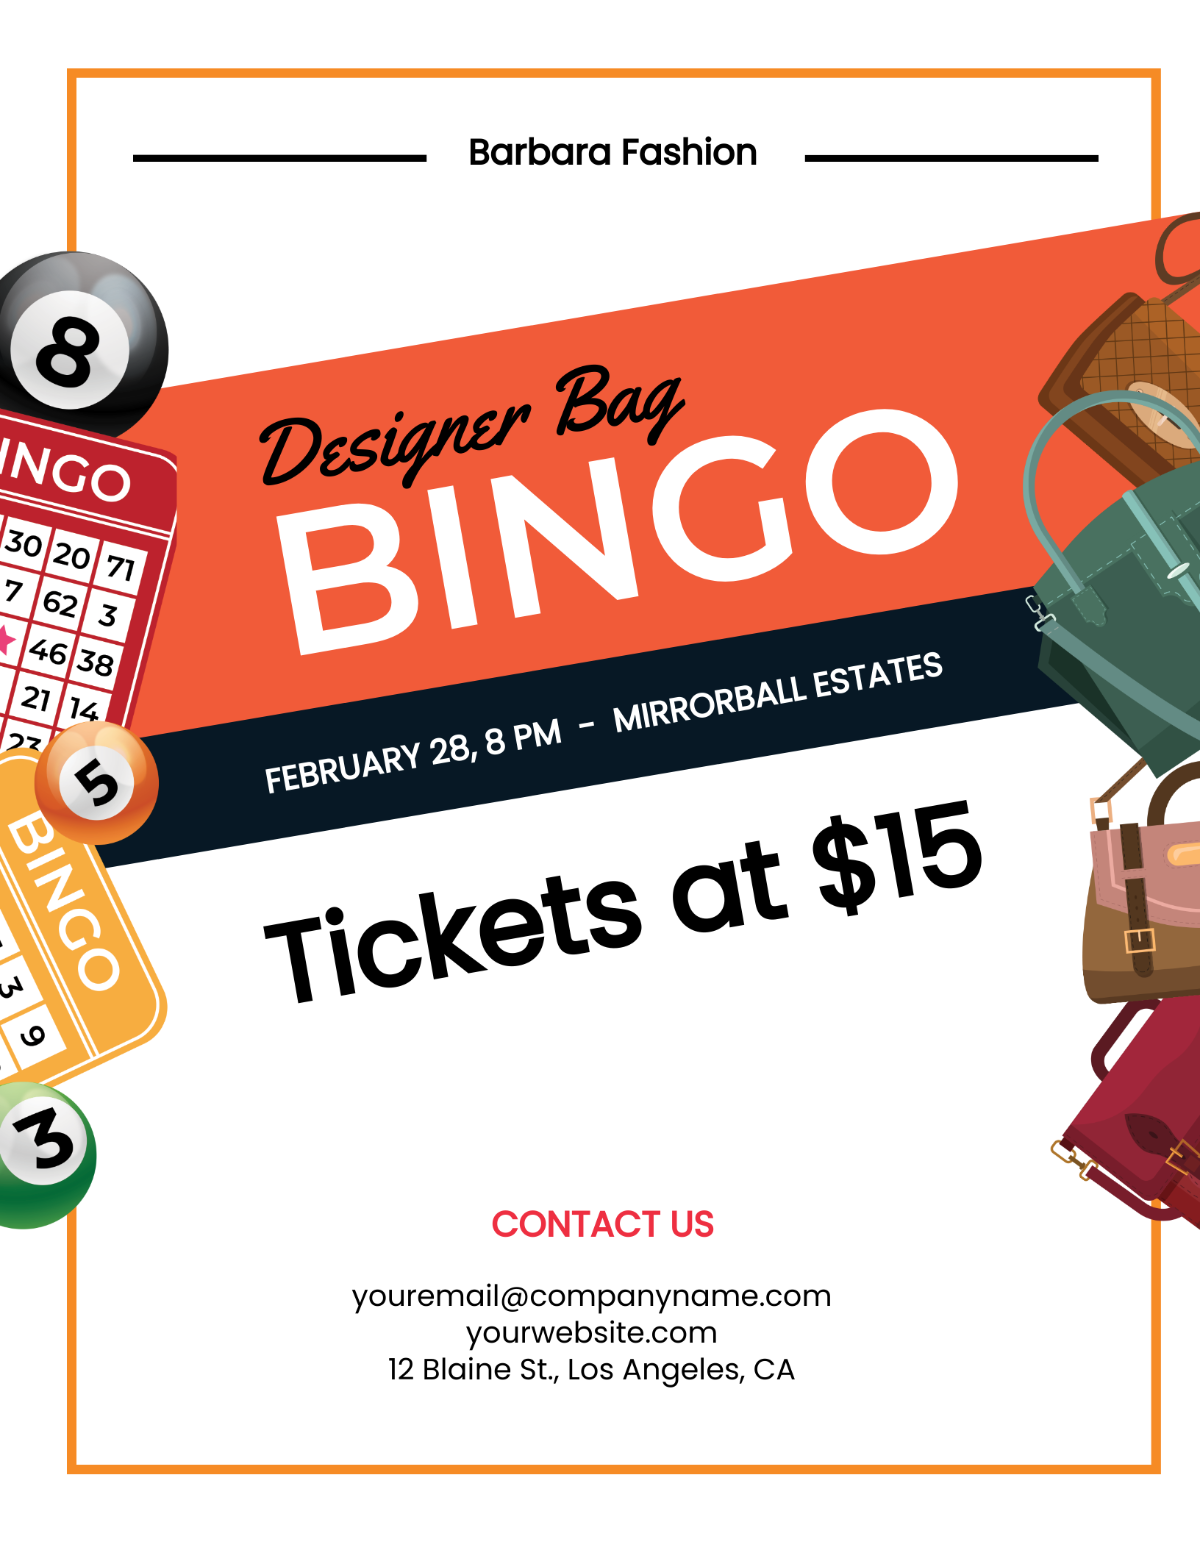 Free Designer Bag Bingo Flyer Template